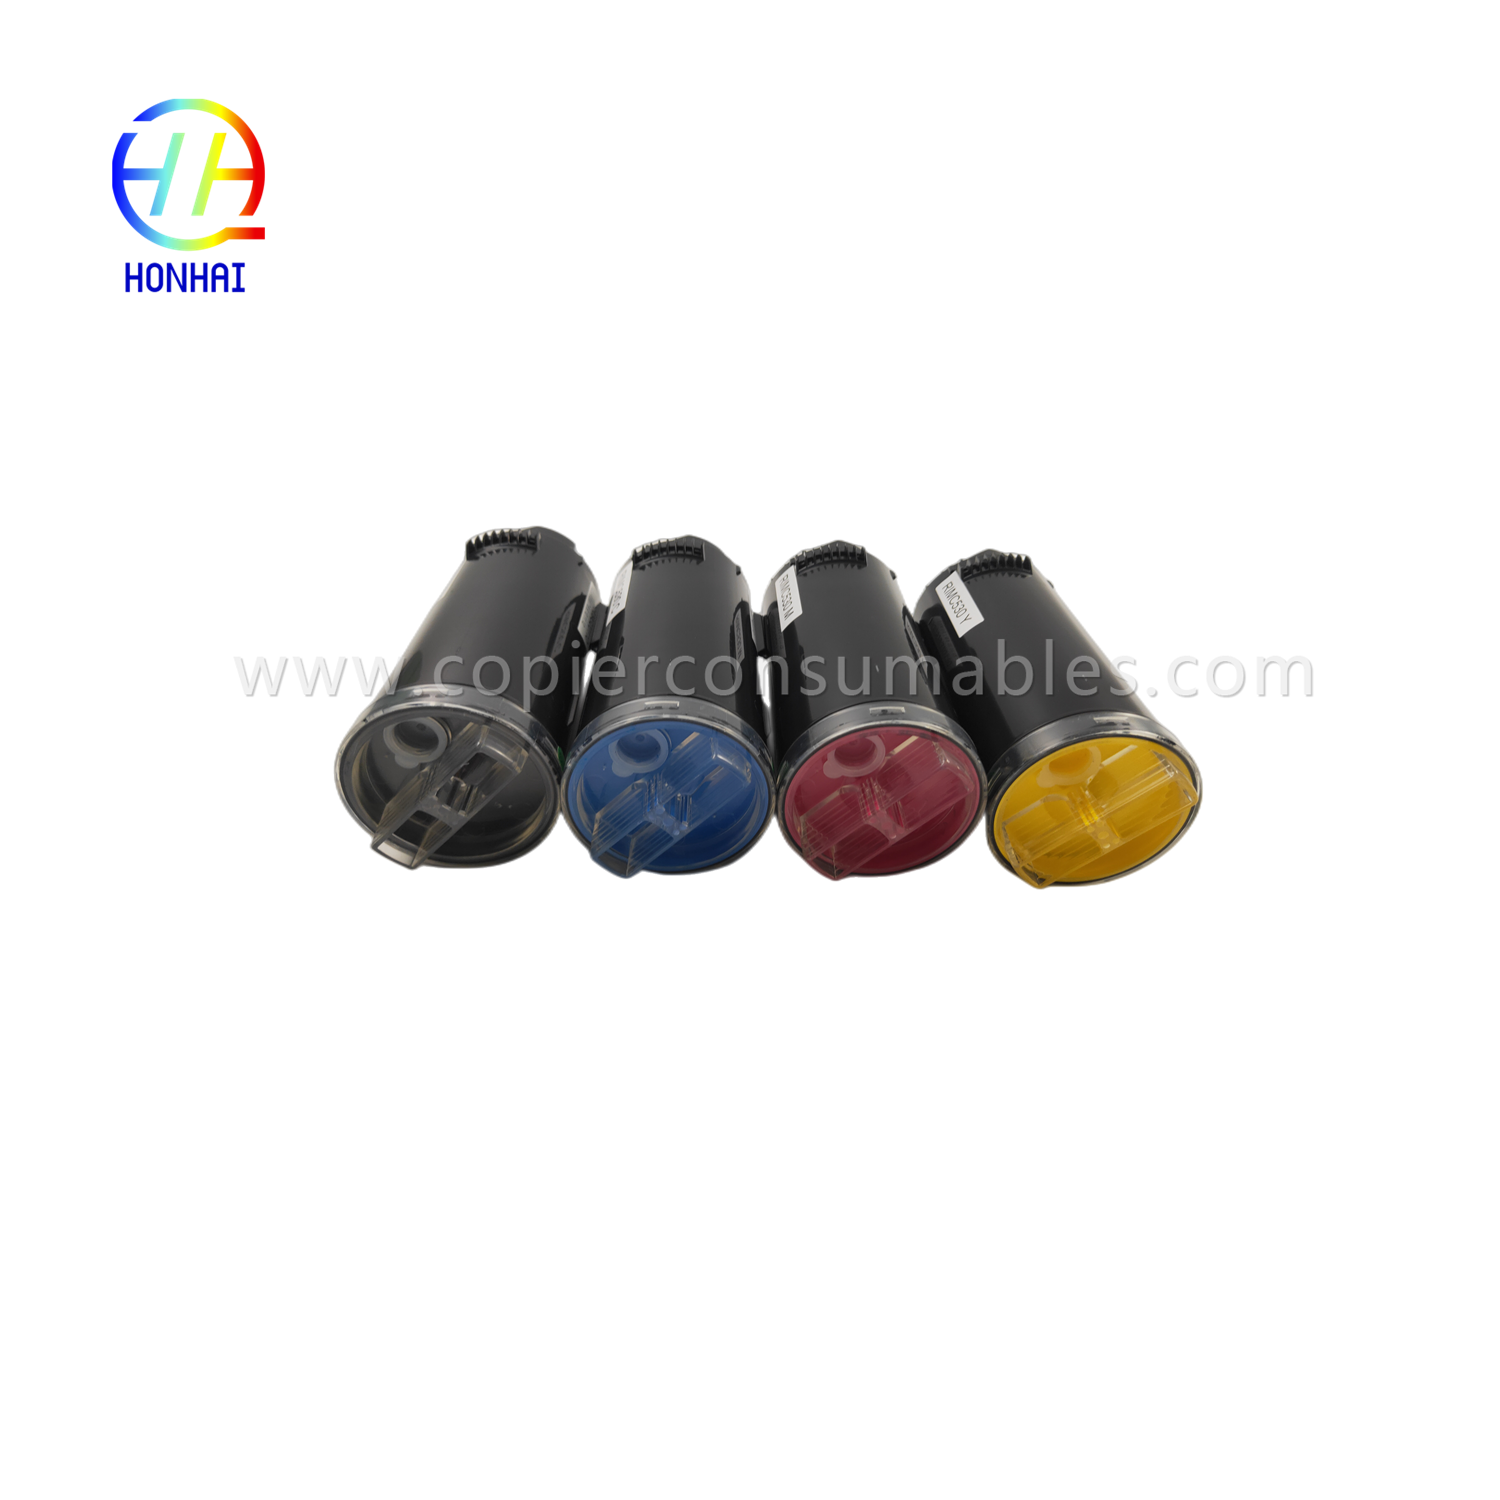 https://c585.goodao.net/toner-cartridge-set-imported-powder-for-ricoh-imc530-imc530f-imc530fb-ref-418240-ref-418241-ref-418242-ref-418243-